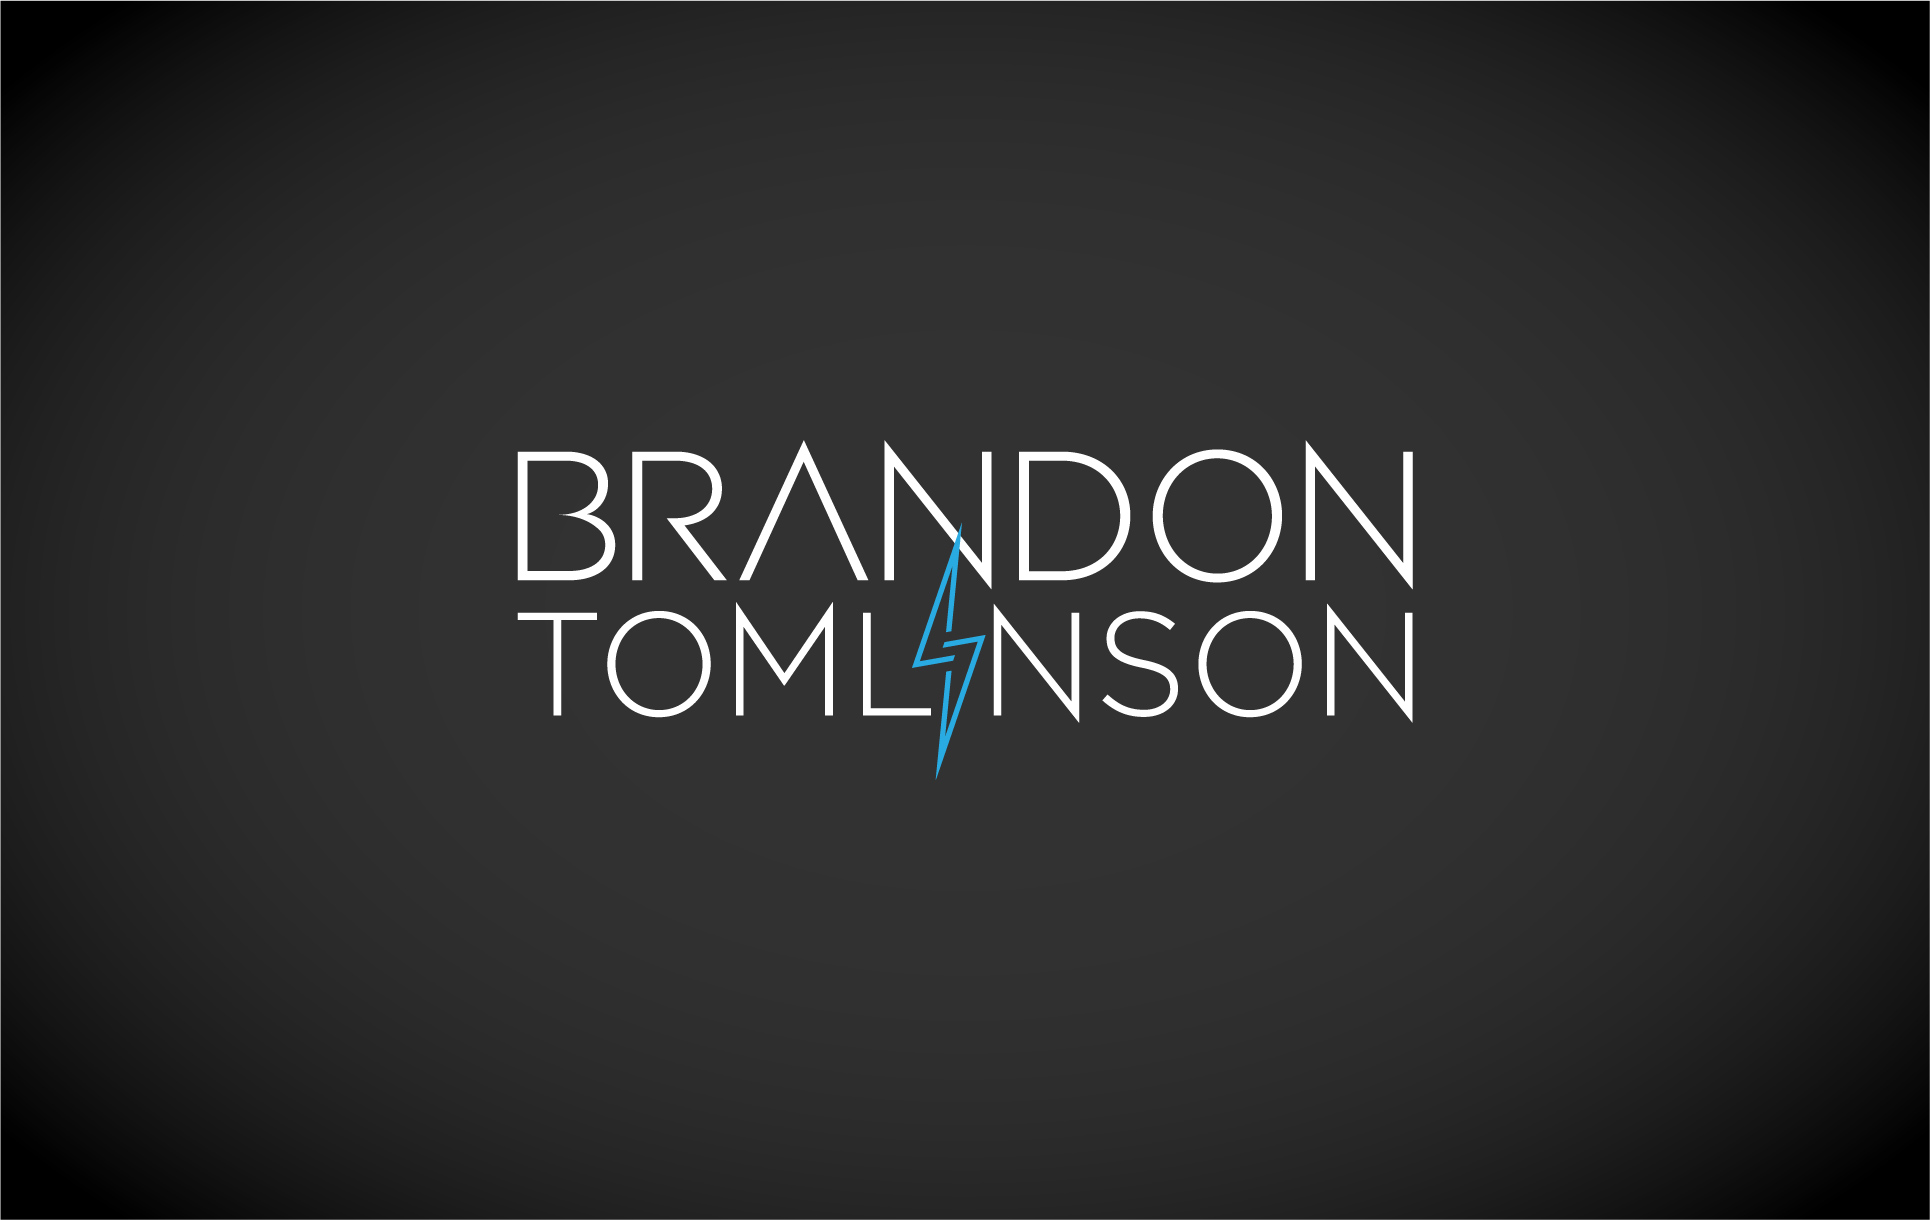 Brandon Tomlinson